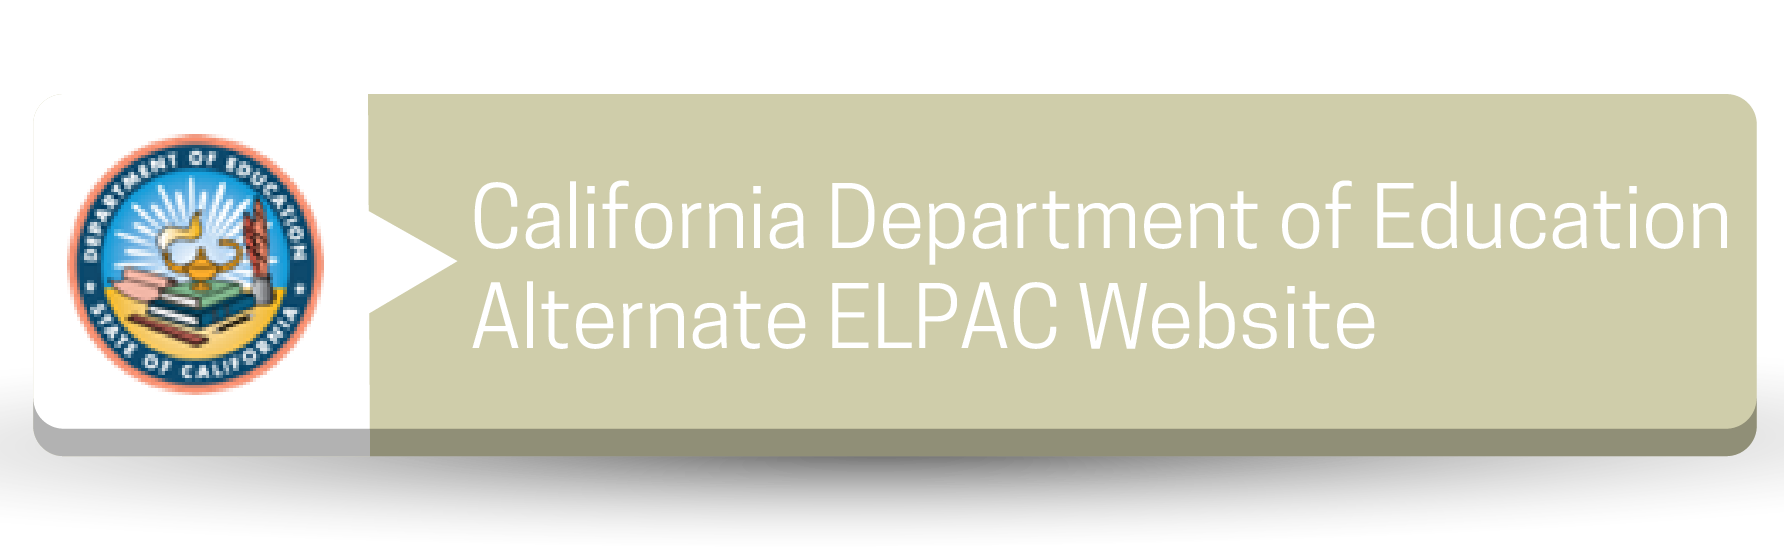 California Department of Education Alternate ELPAC Website Button